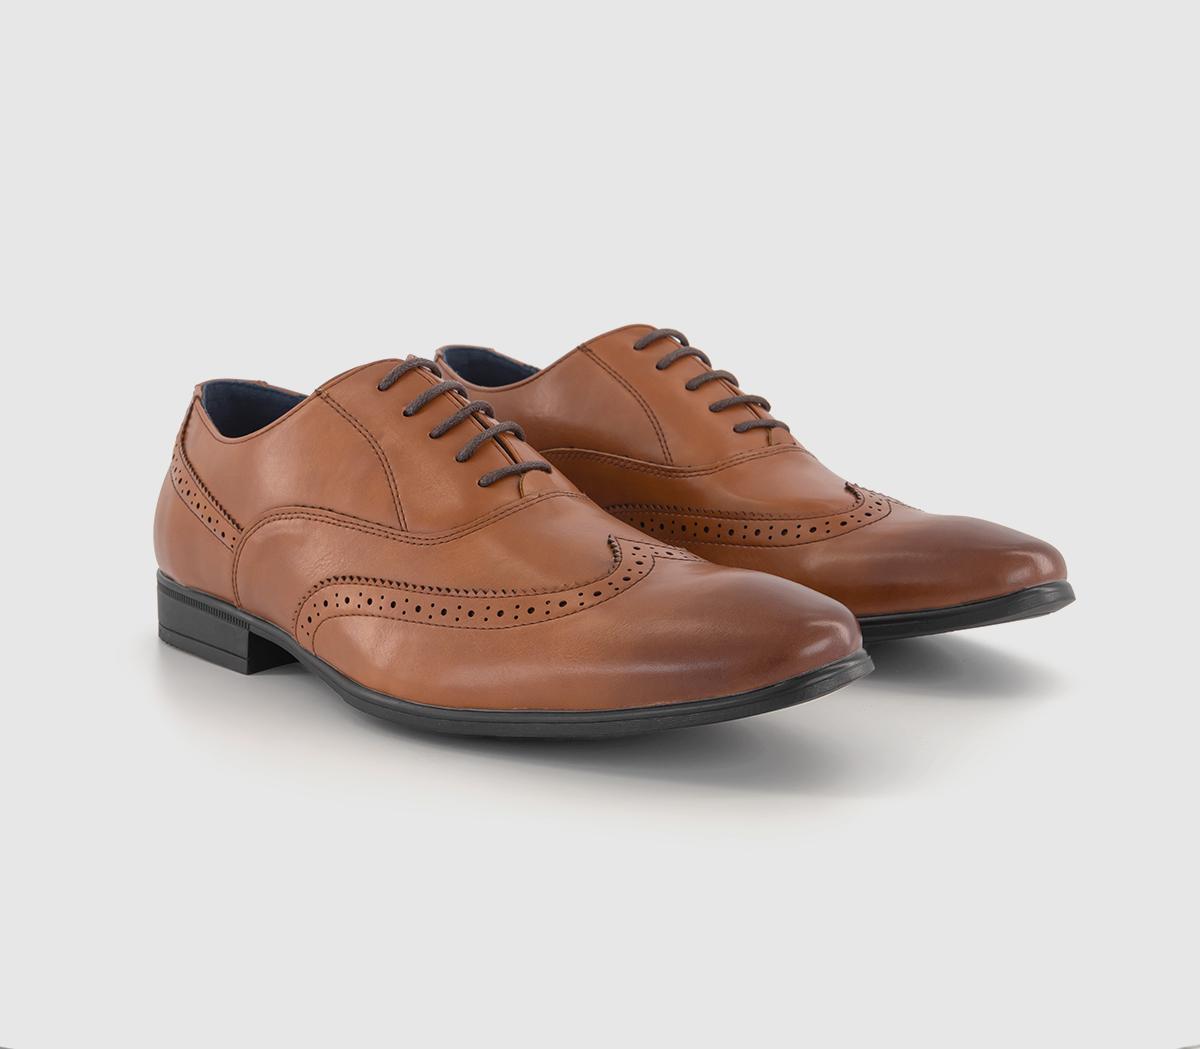 OFFICE Mens Martel Wingtip Oxford Shoes Tan, 10